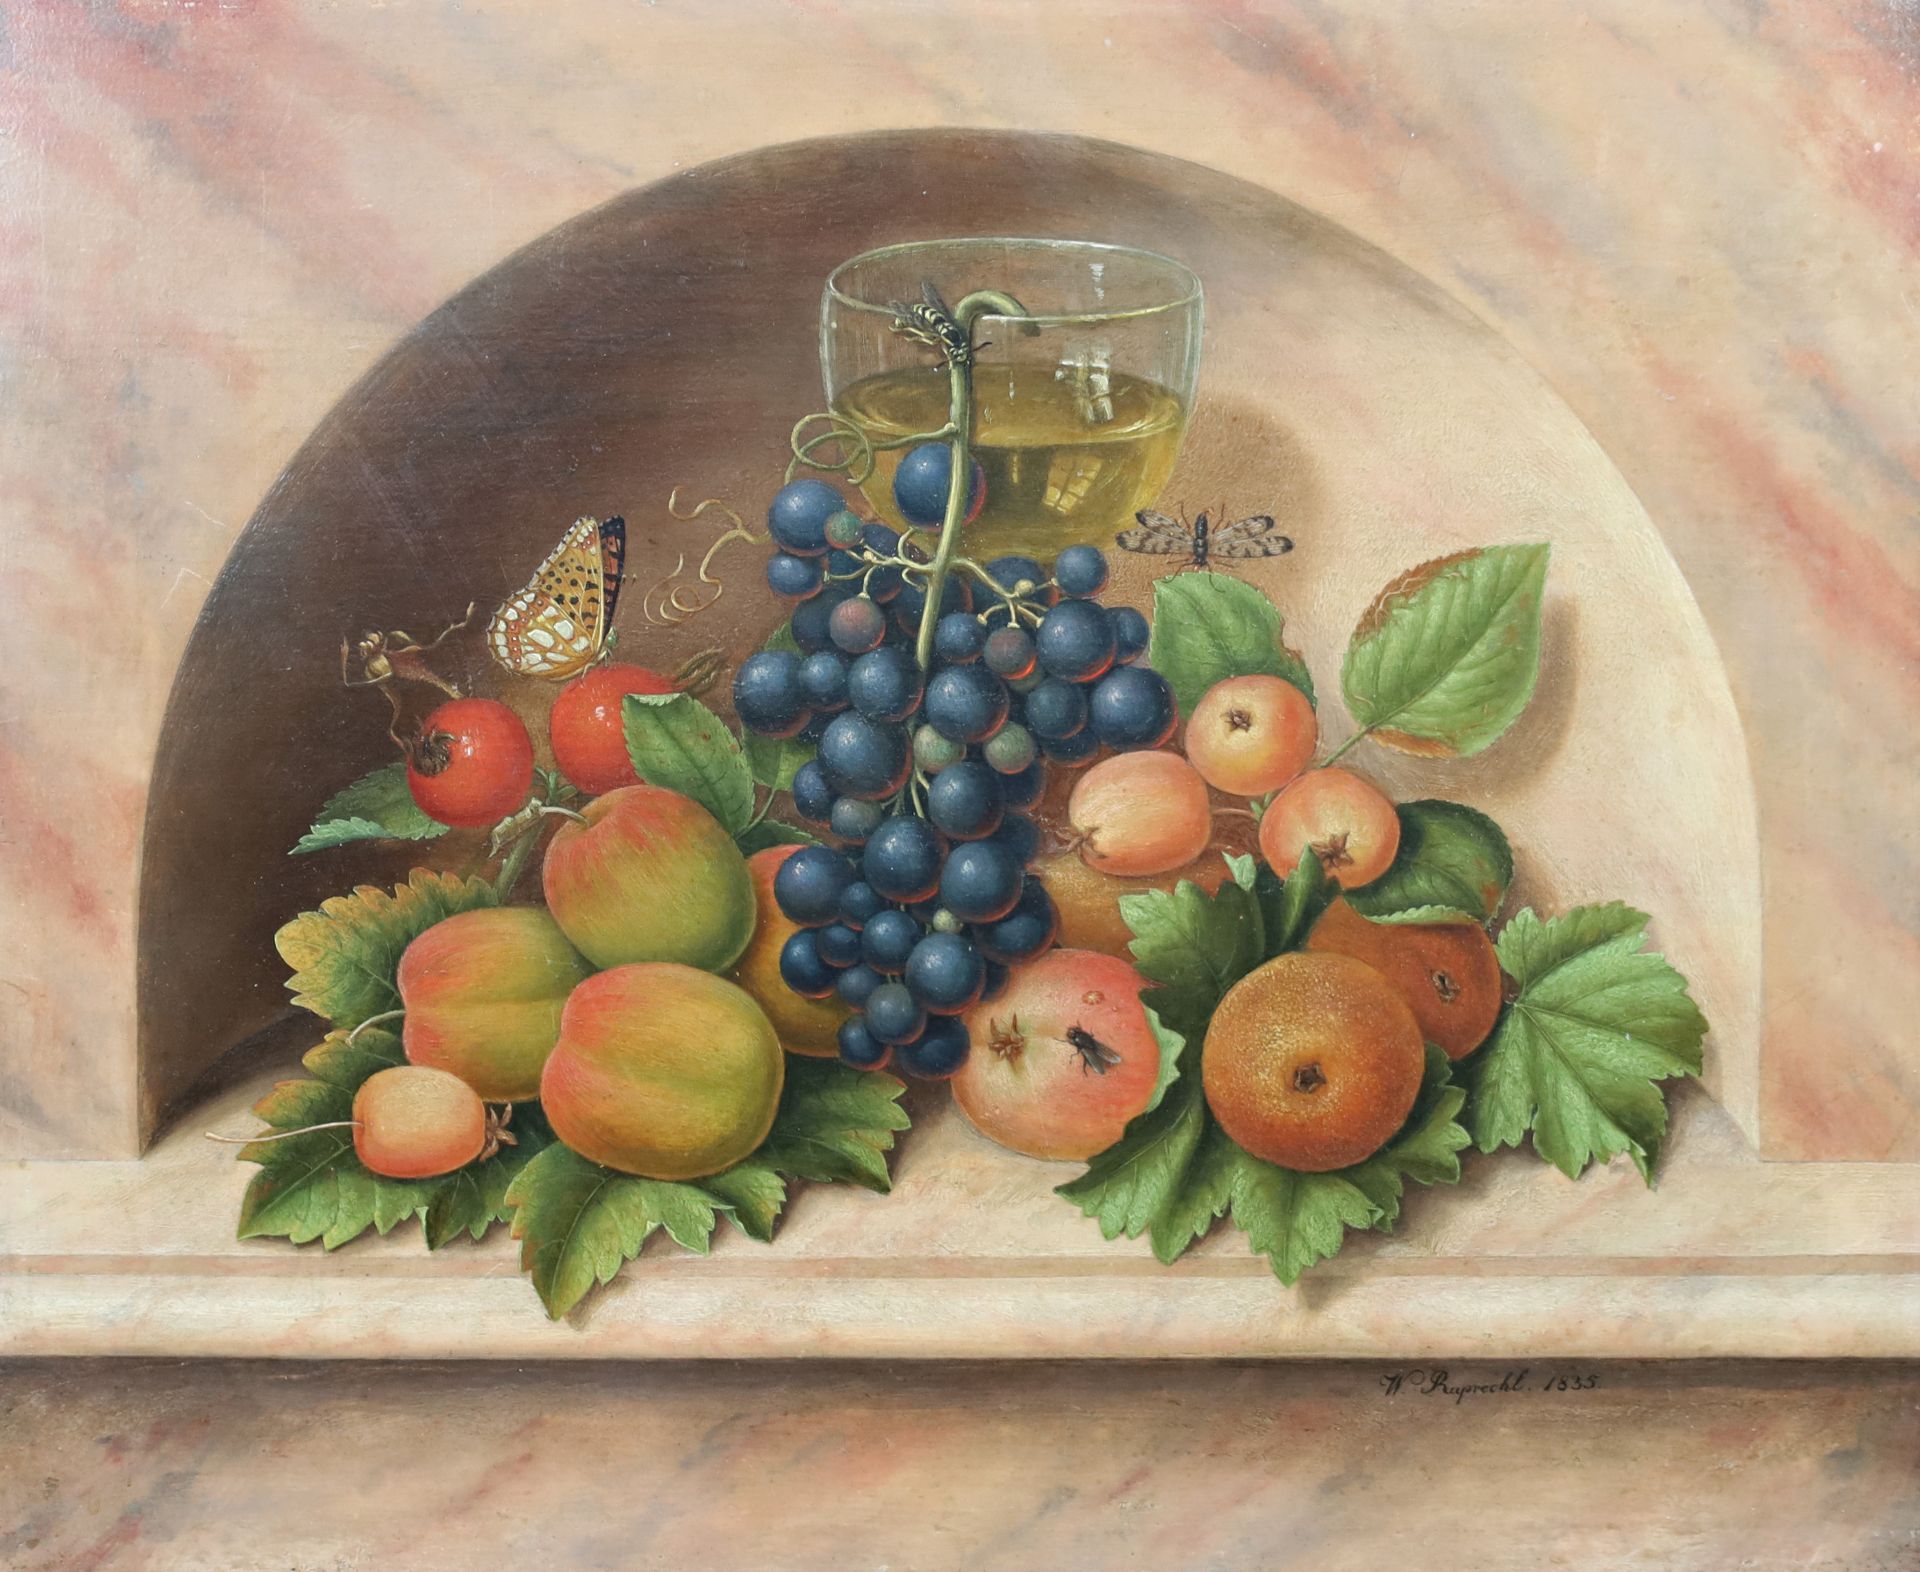 Wilhelm RUPRECHT (1806 - 1870). Fruit still life. 1835.